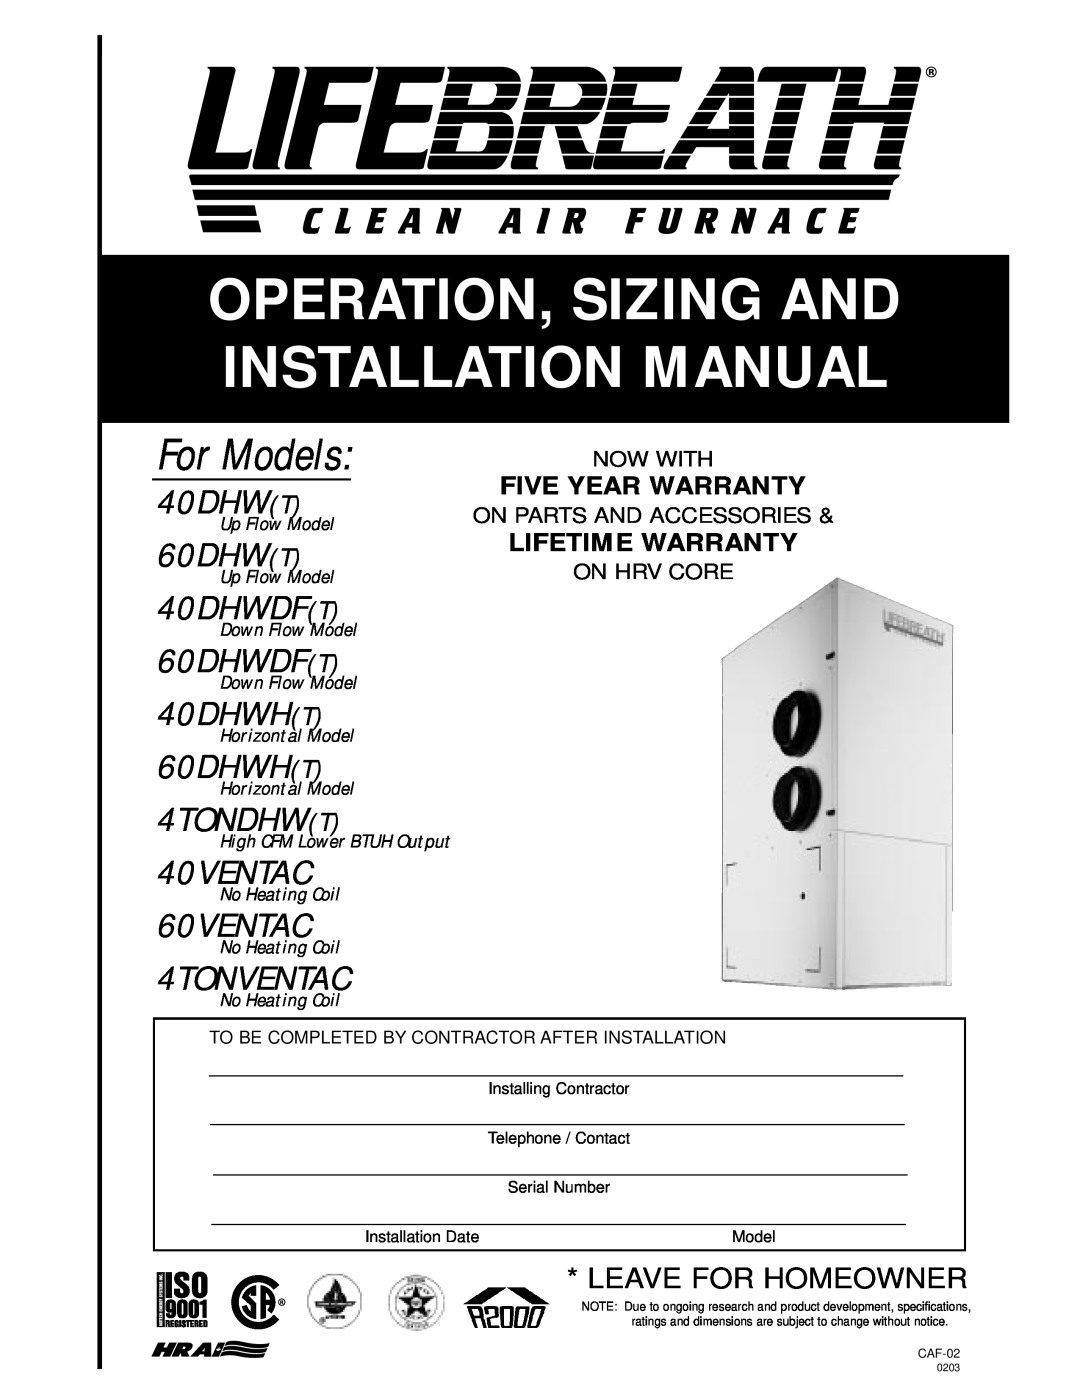 Lifebreath 60VENTAC installation manual For Models, Operation, Sizing And Installation Manual, 40DHWT, 60DHWT, 40DHWDFT 